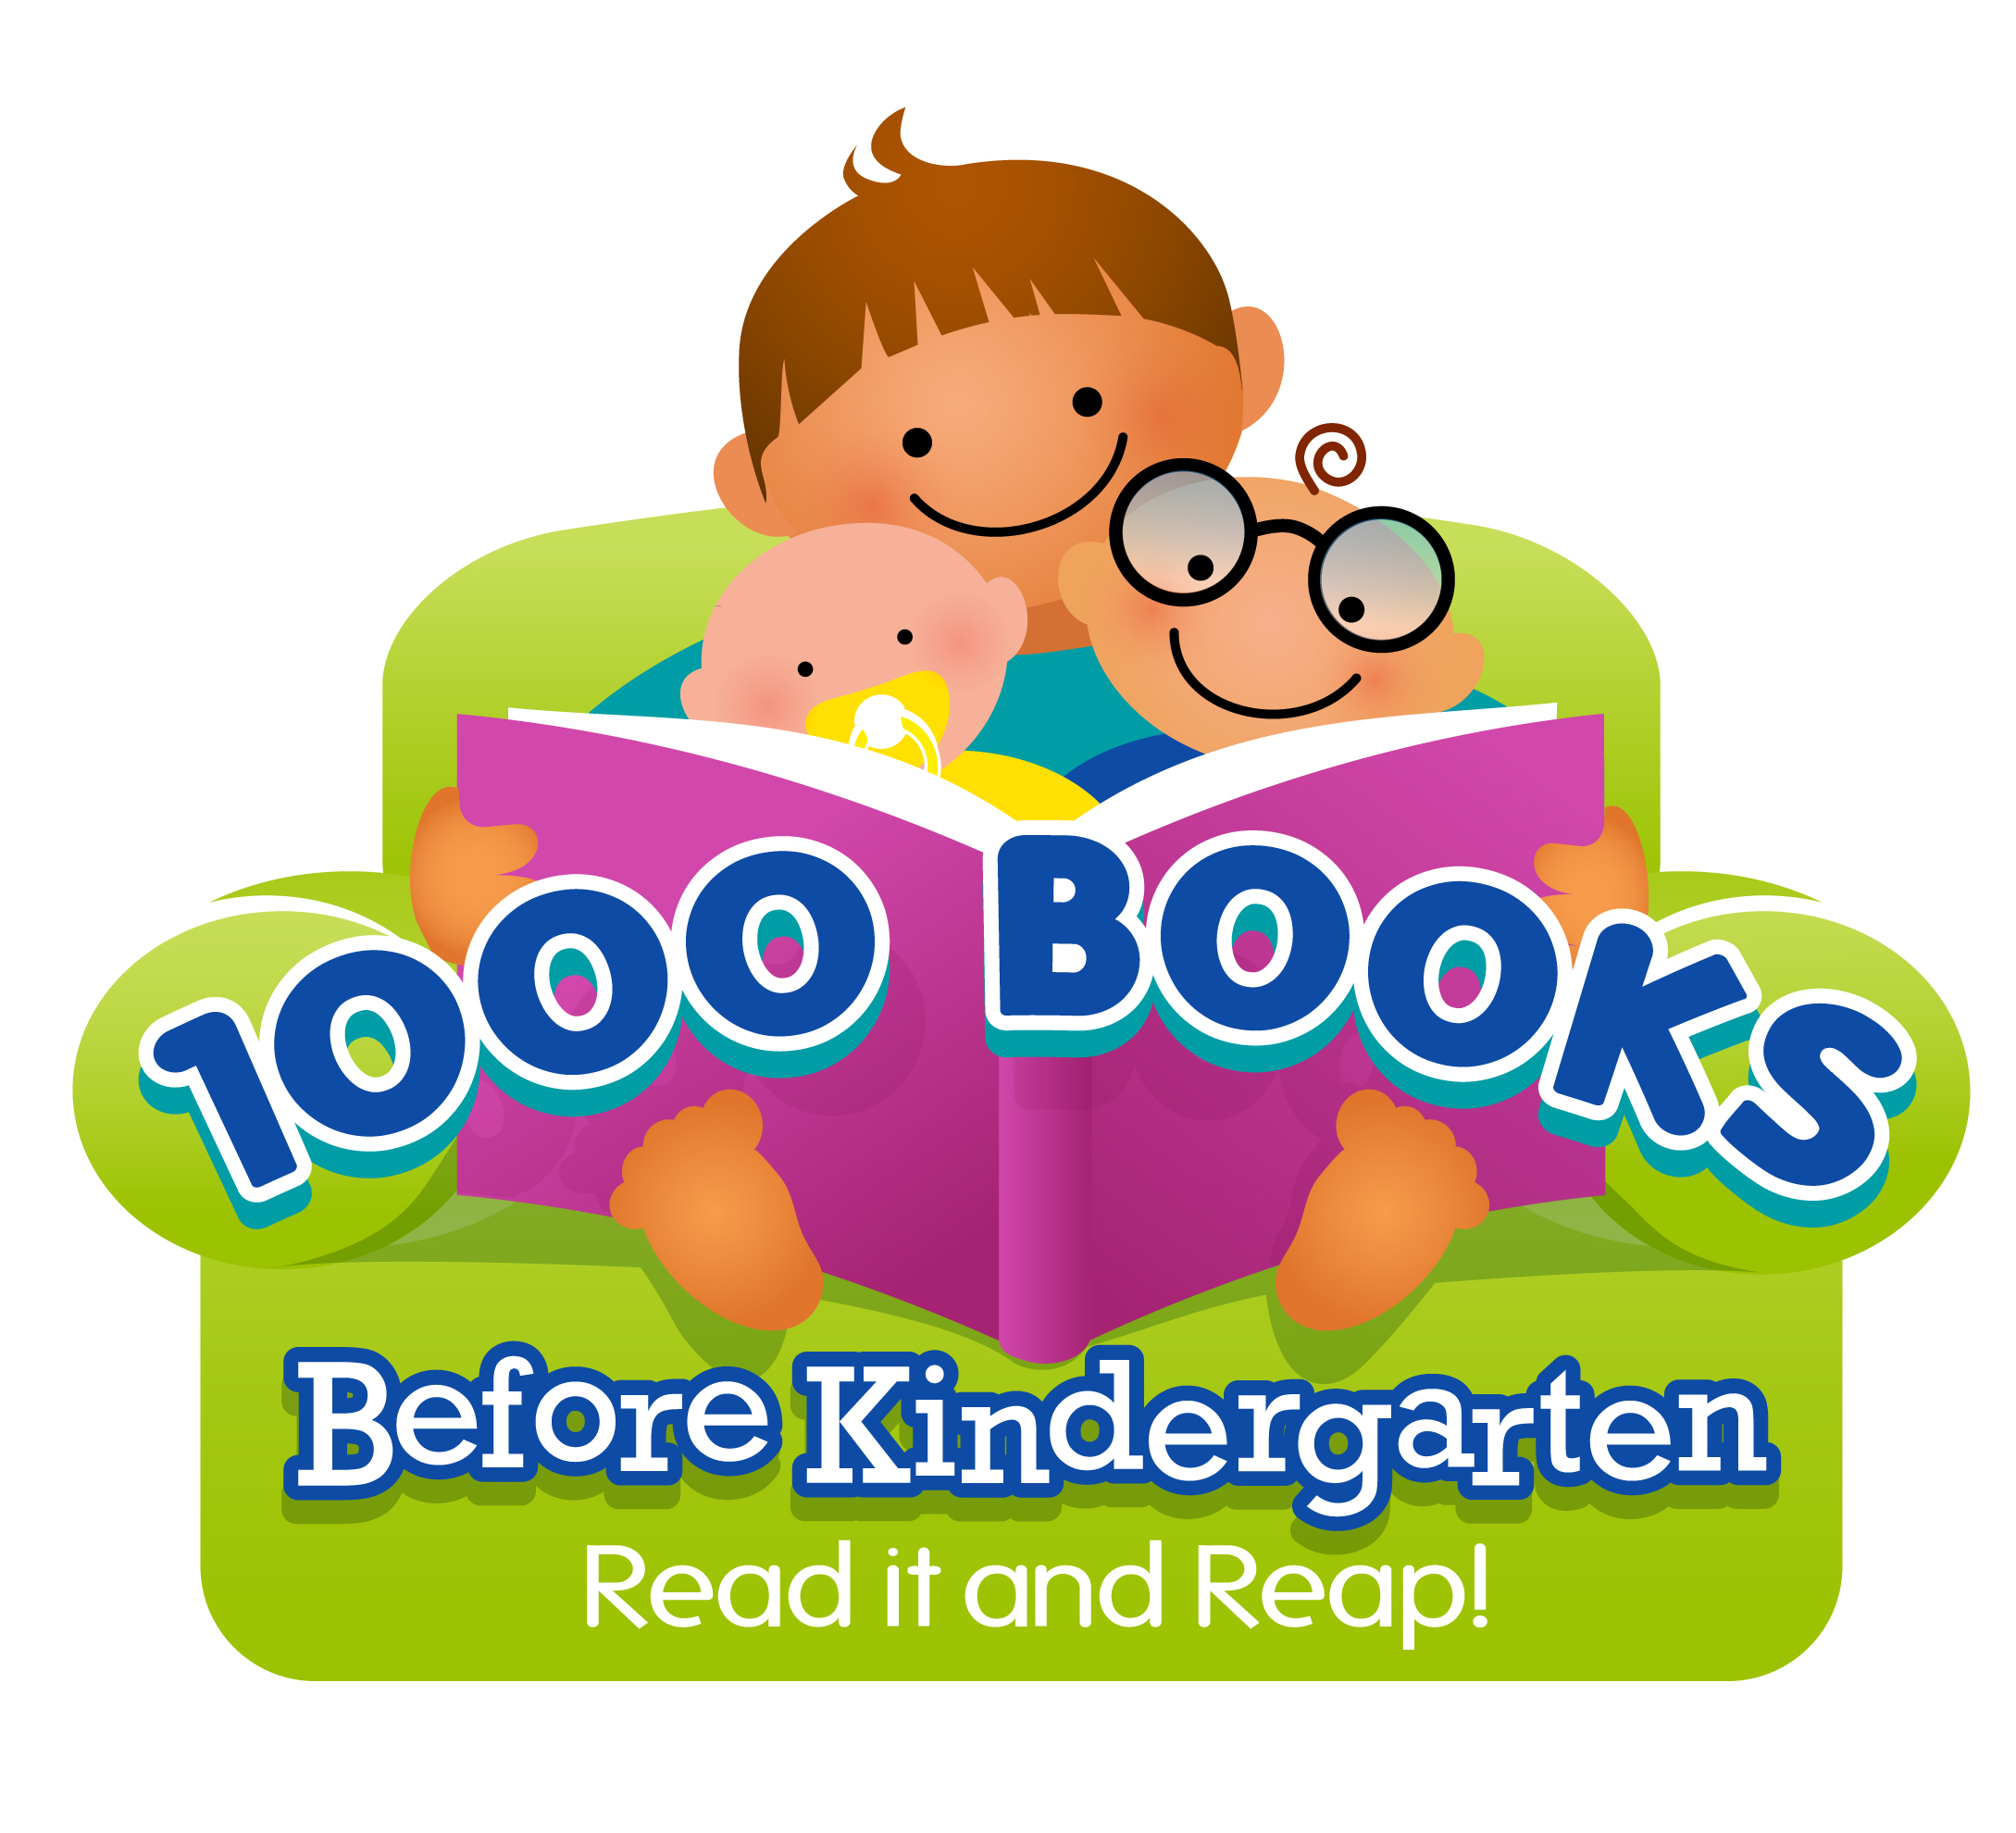 1,000 Books Before Kinder.